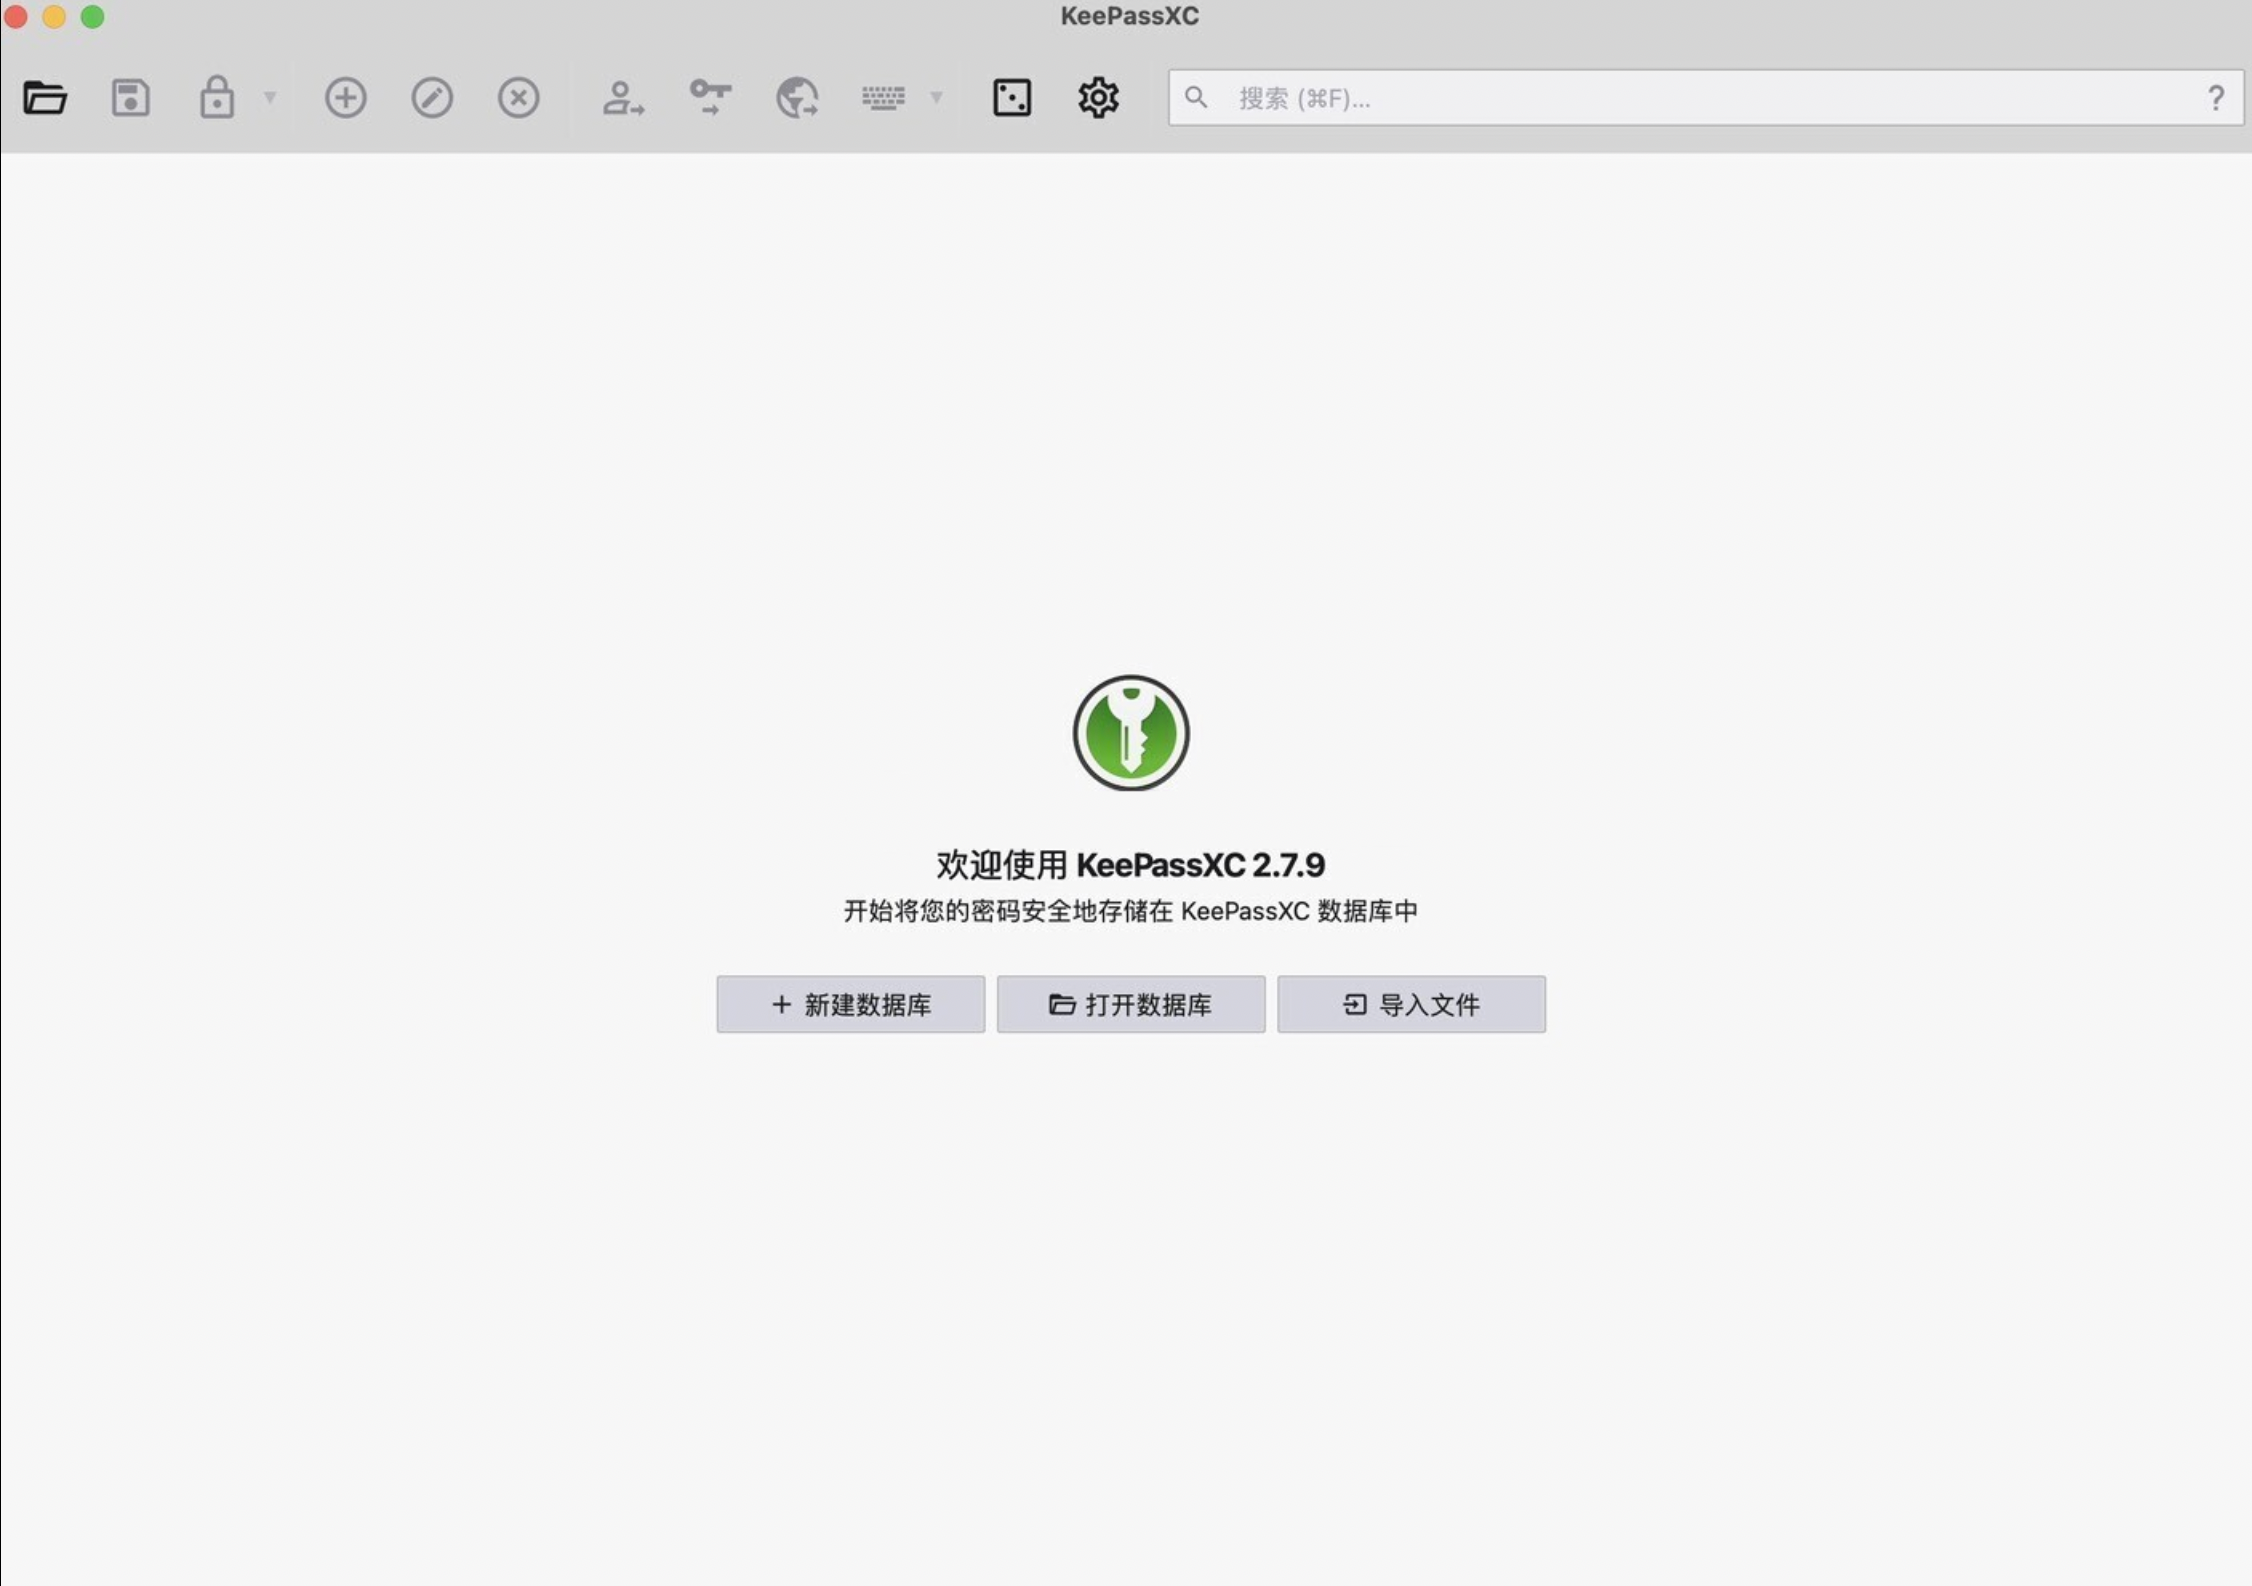 KeePassXC for Mac v2.7.9 密码管理软件 中文版-1